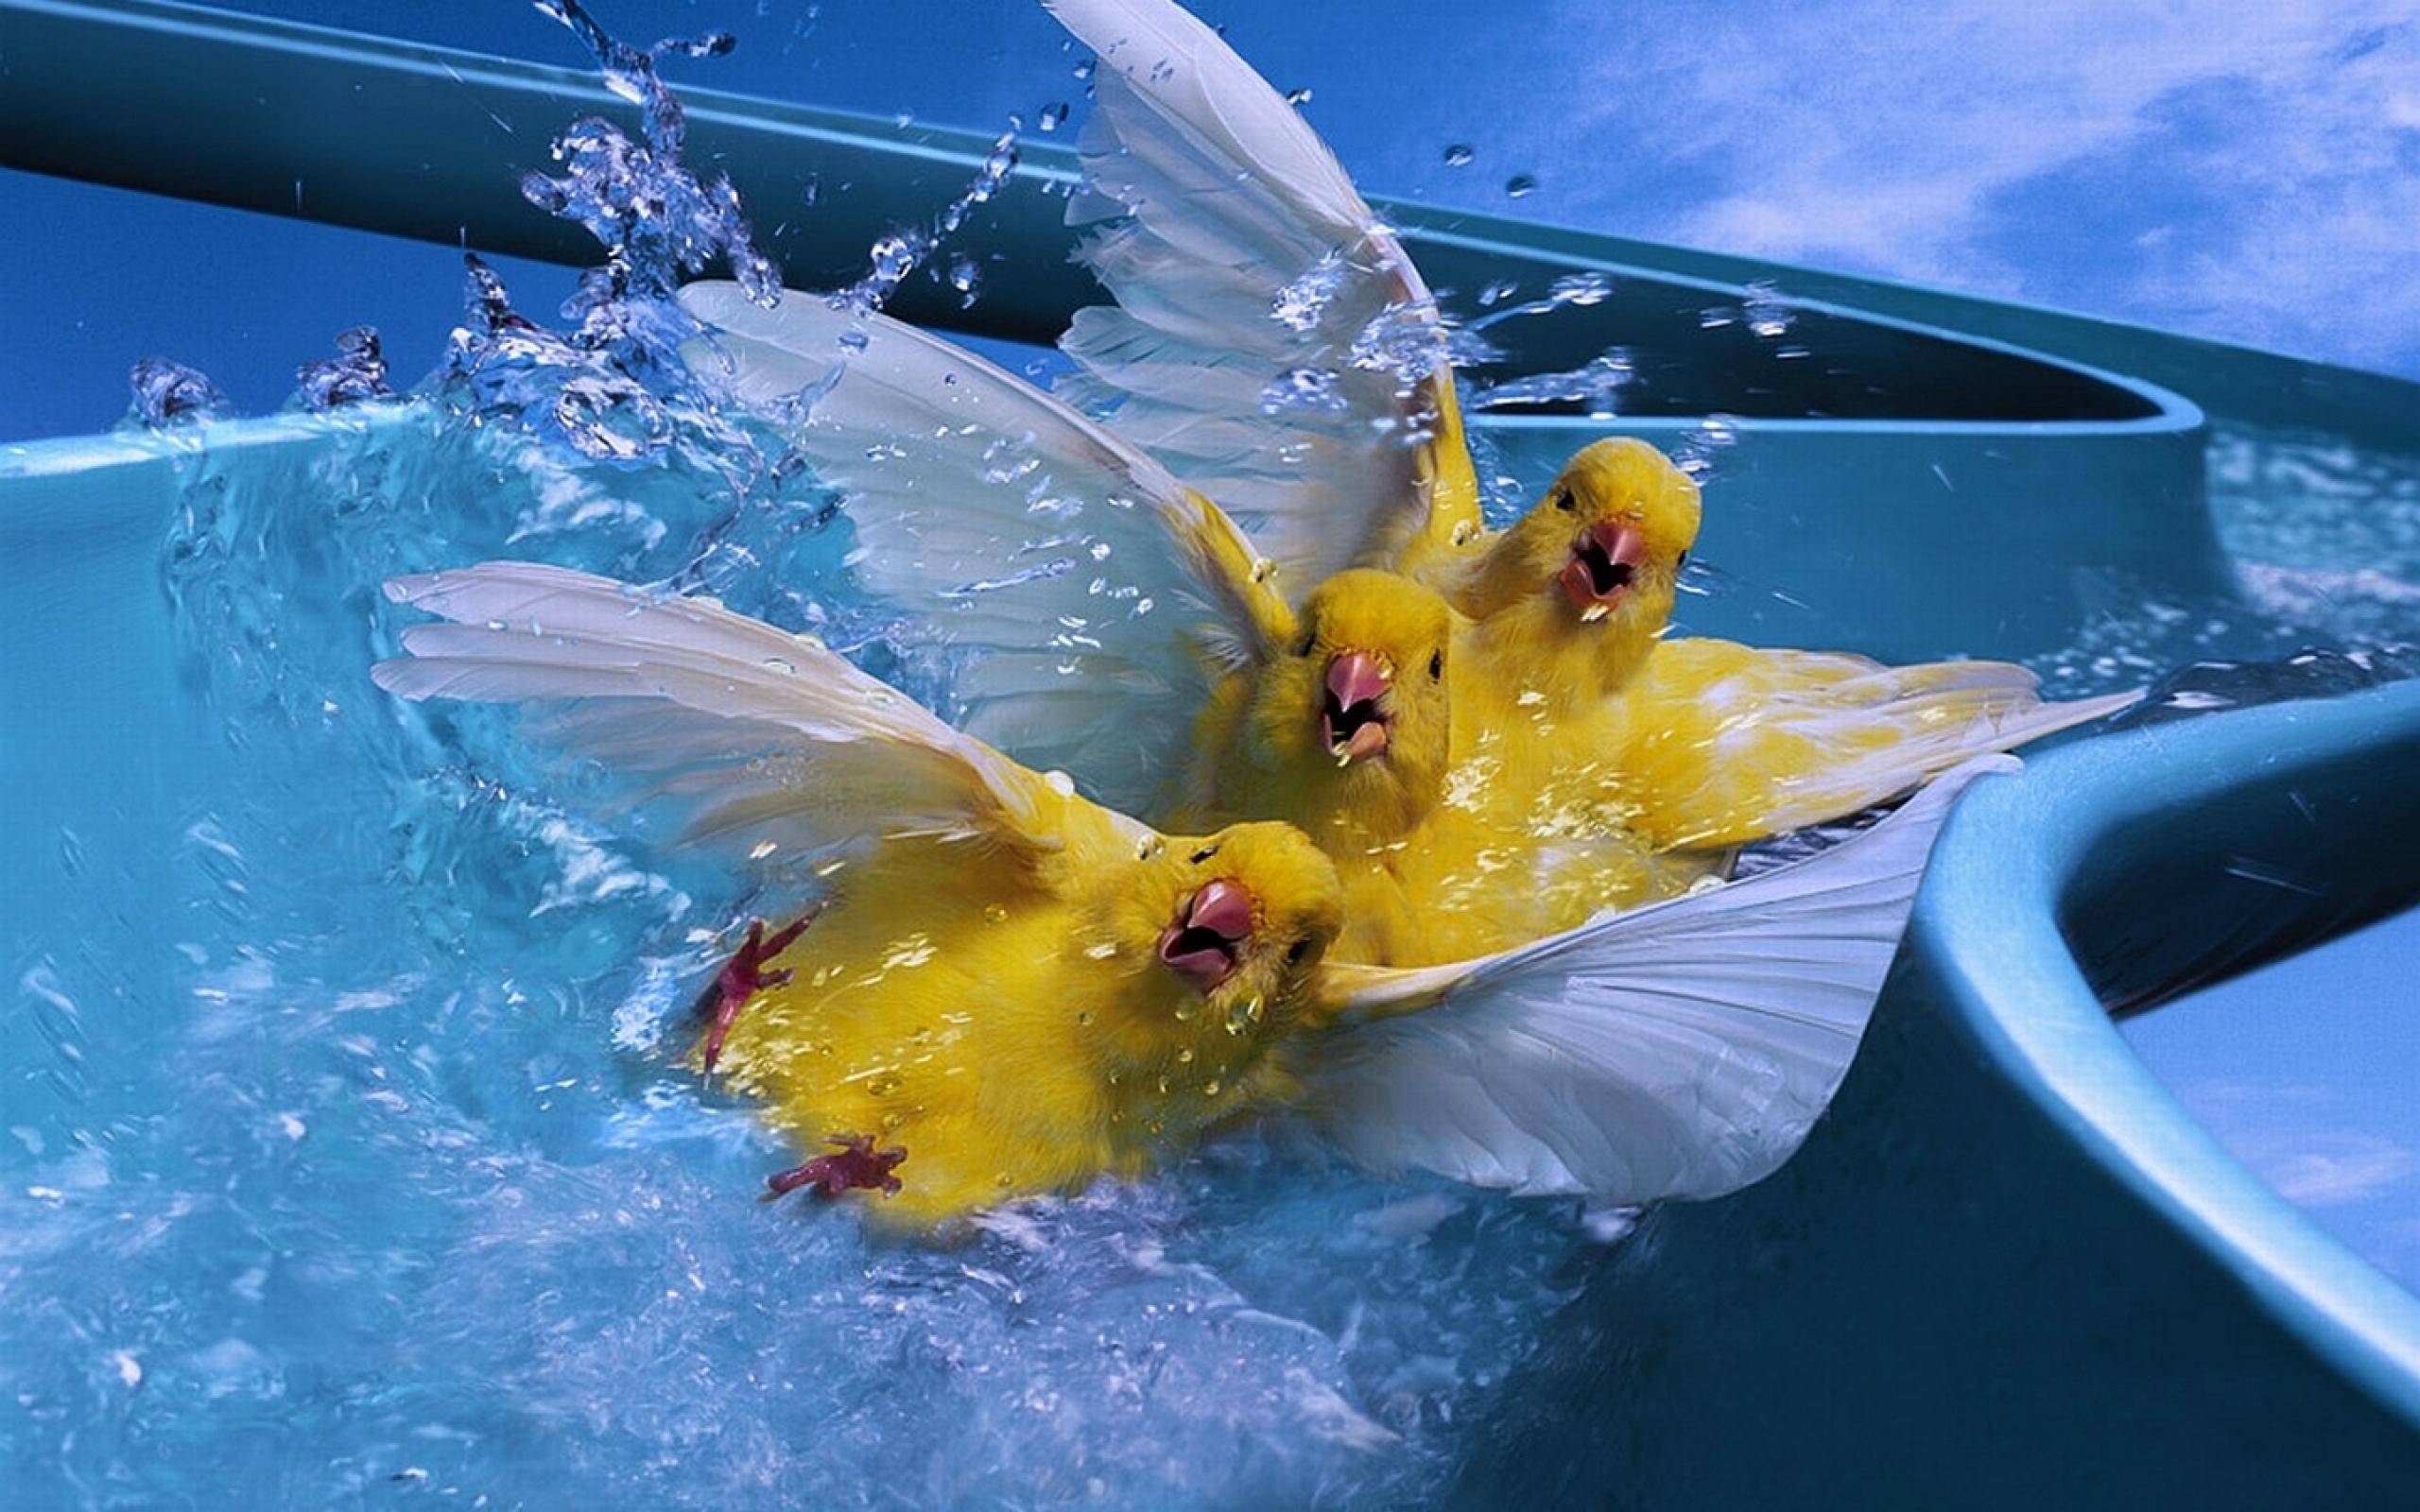 Weeeeee Birds On A Water Slide Look Like Fun Too Funny